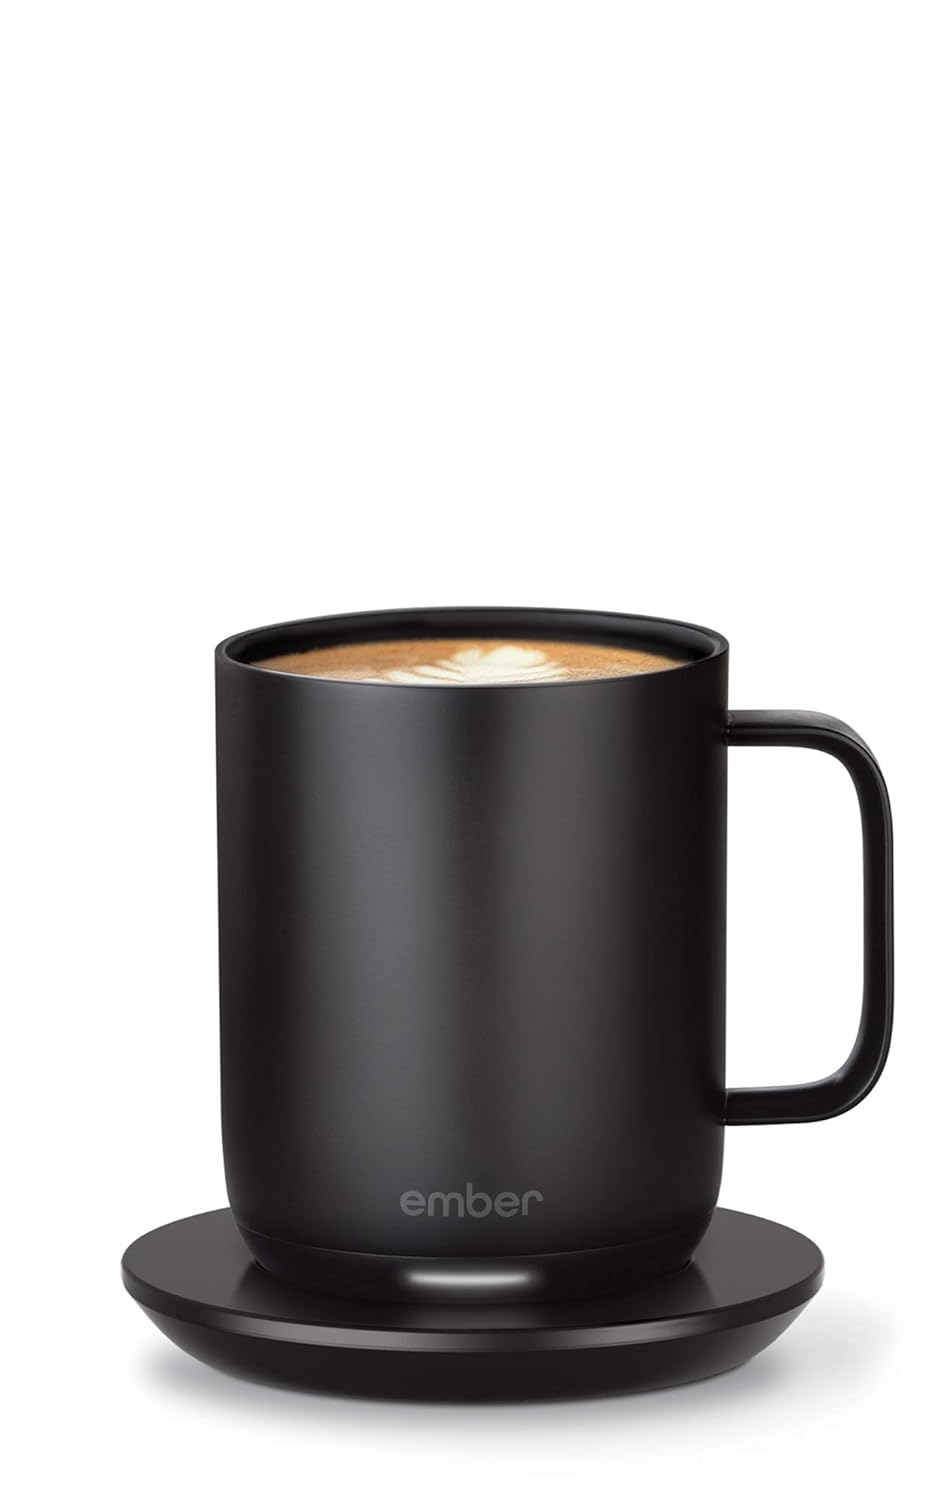 Ember Temperature Control Smart Mug 2 Charging Coaster, Black - New and Improved Design (Black)